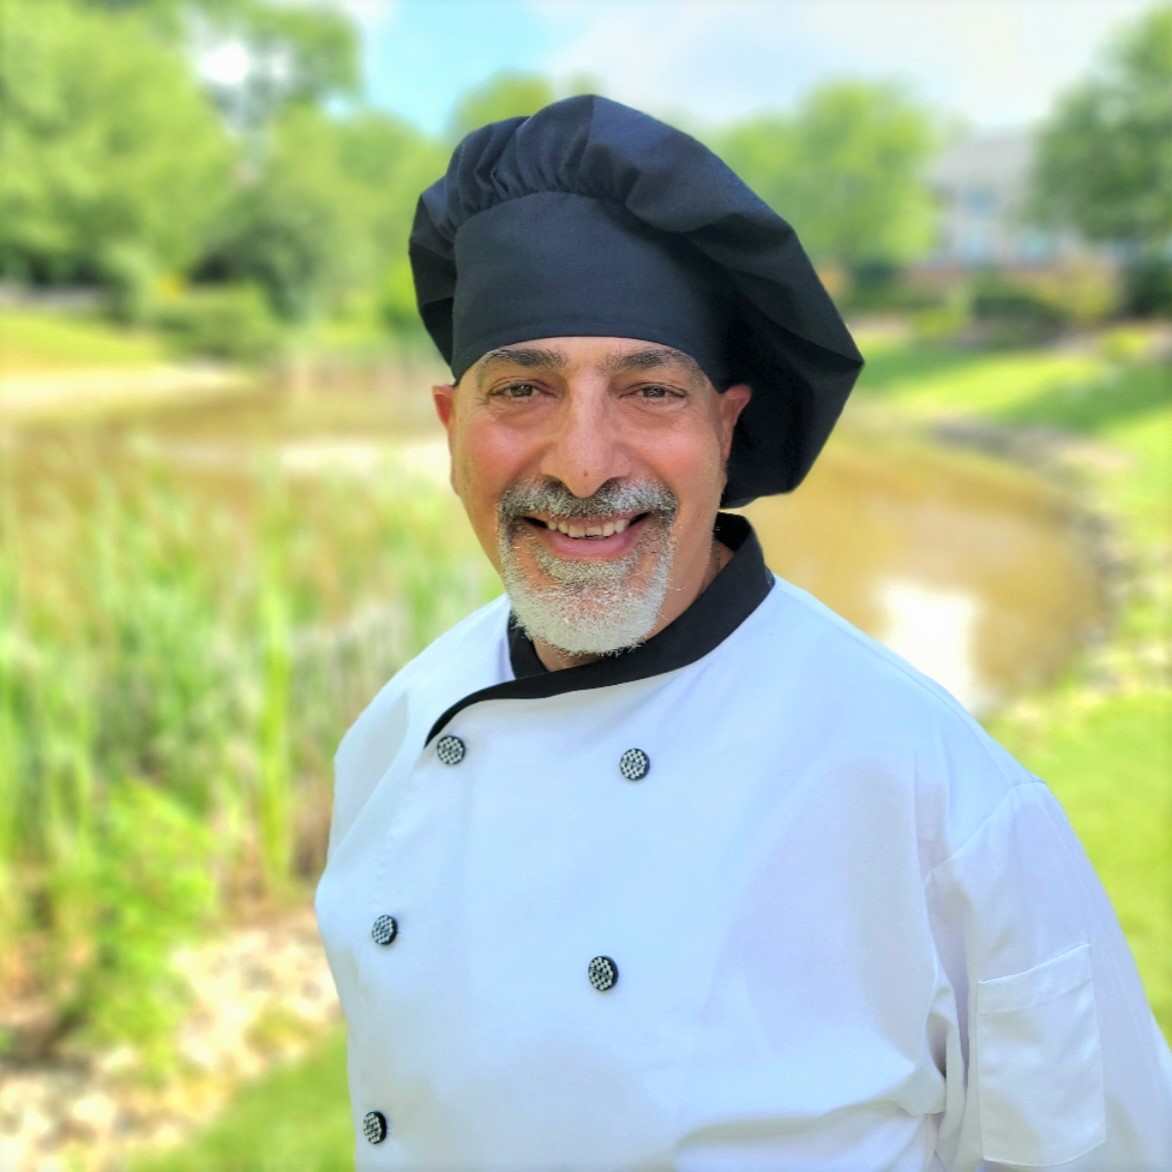 Chef Nader Tehrani